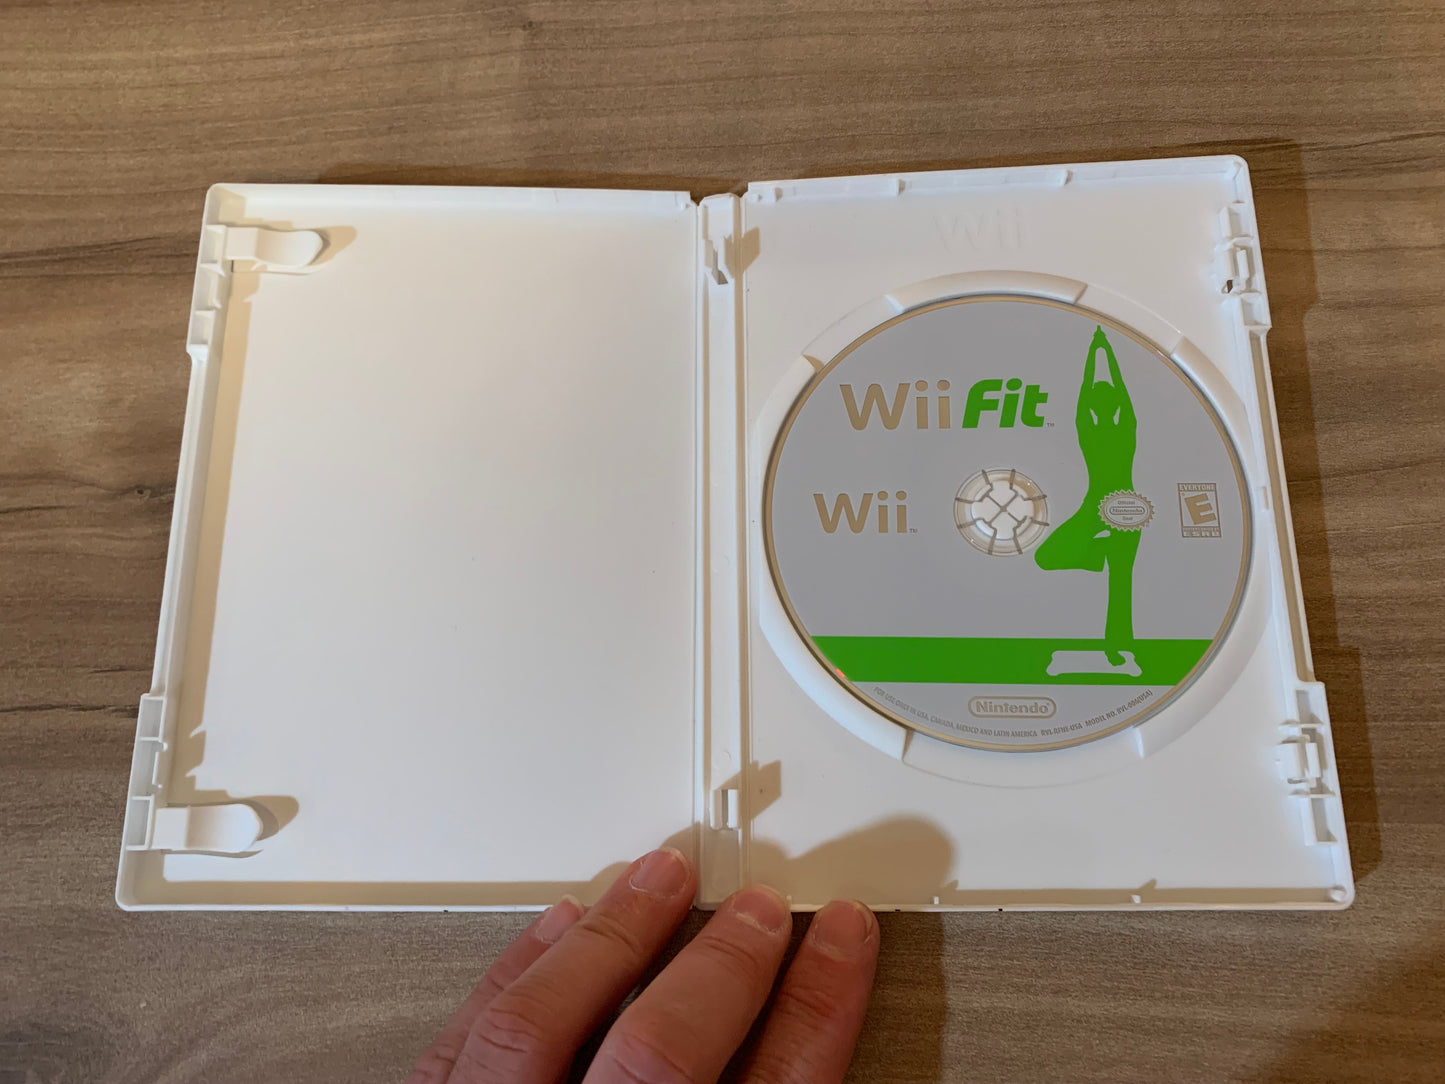 NiNTENDO Wii | Wii FiT